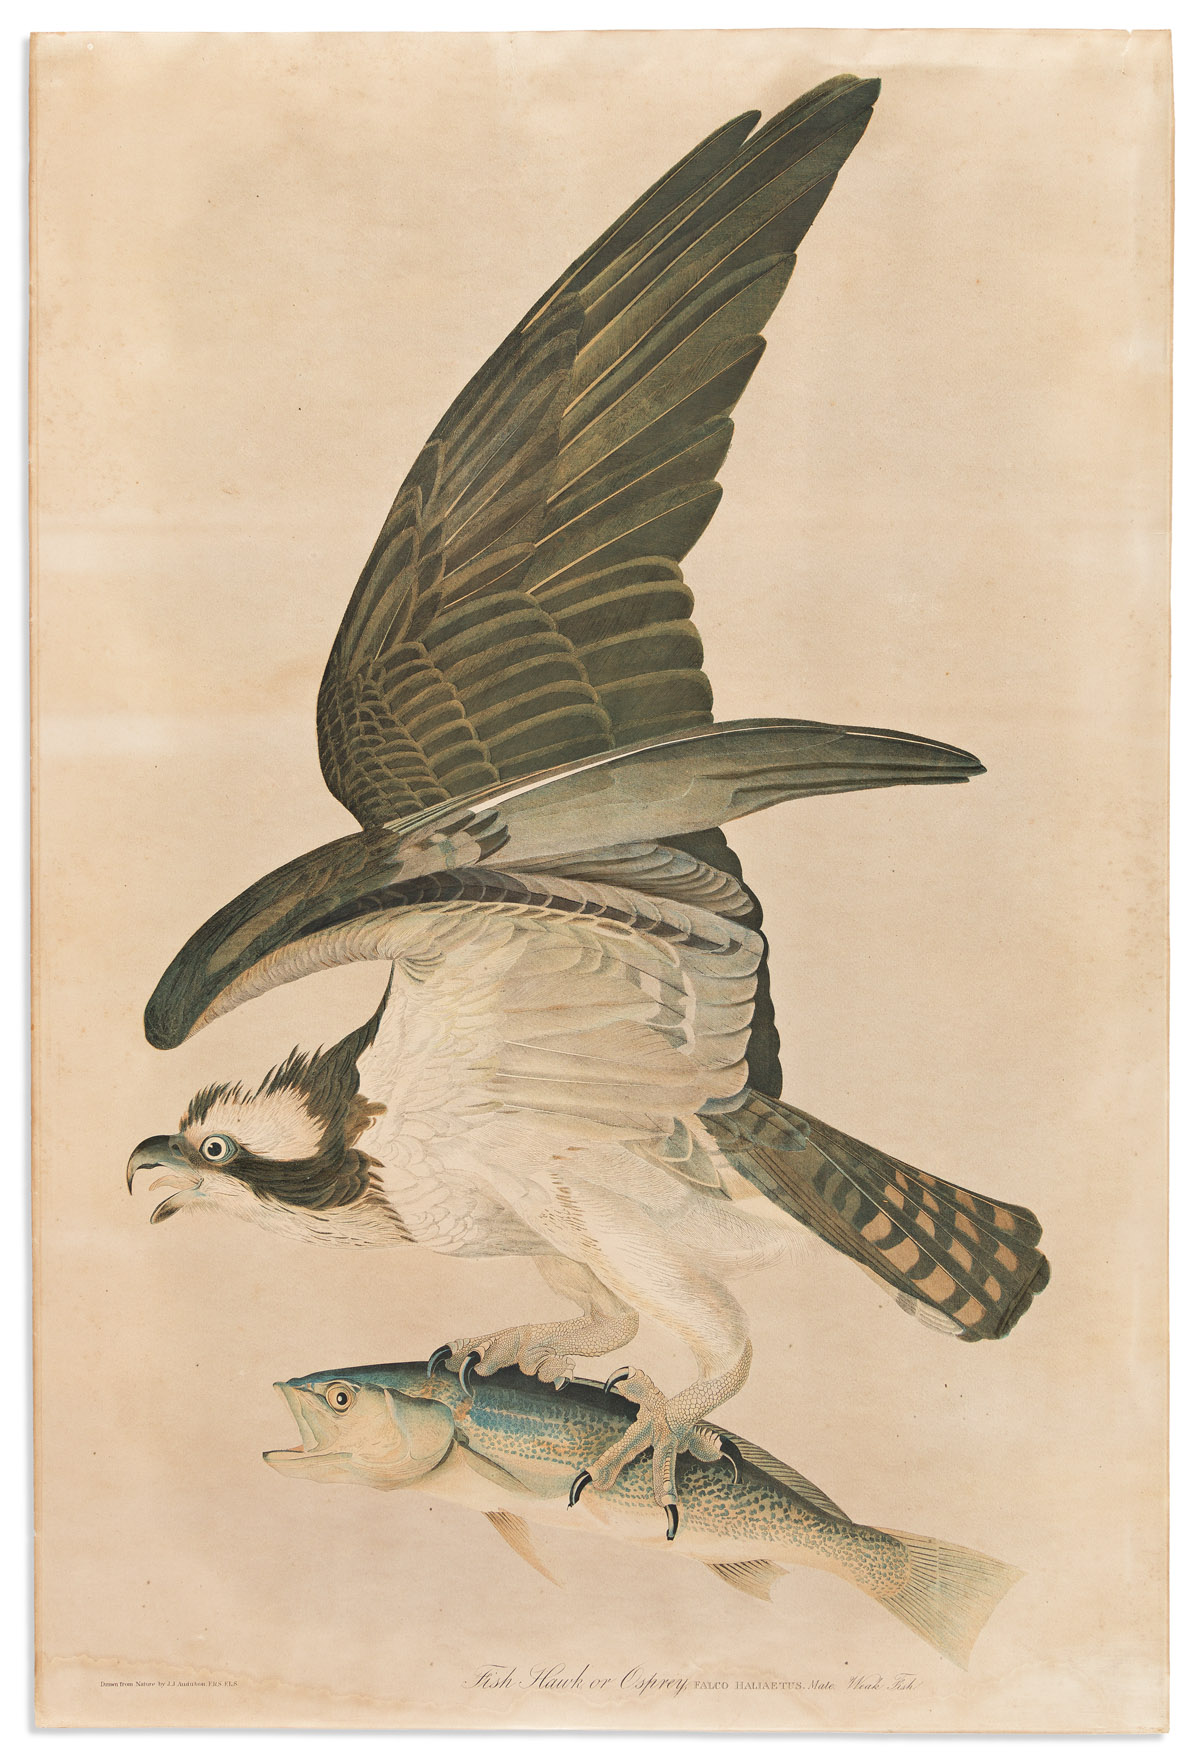 AUDUBON JOHN JAMES Fish Hawk or Osprey [Plate 288]